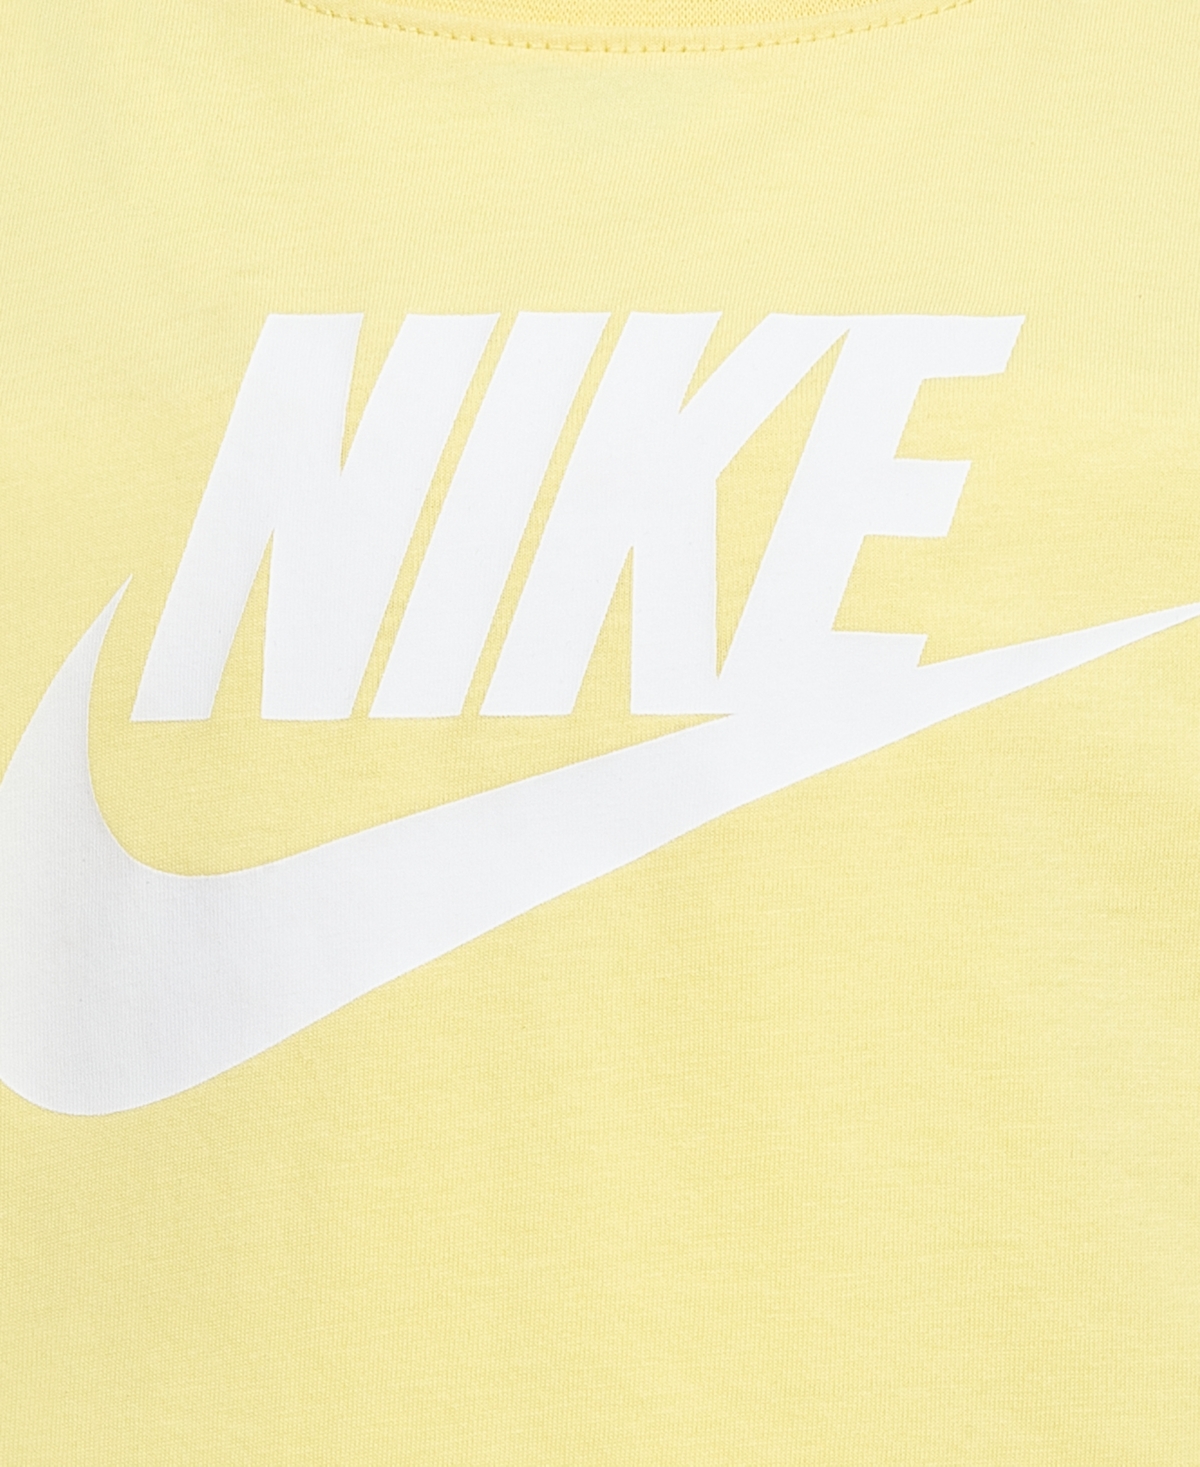 Shop Nike Toddler Girls Club Boxy Short Sleeve T-shirt In Soft Yellow